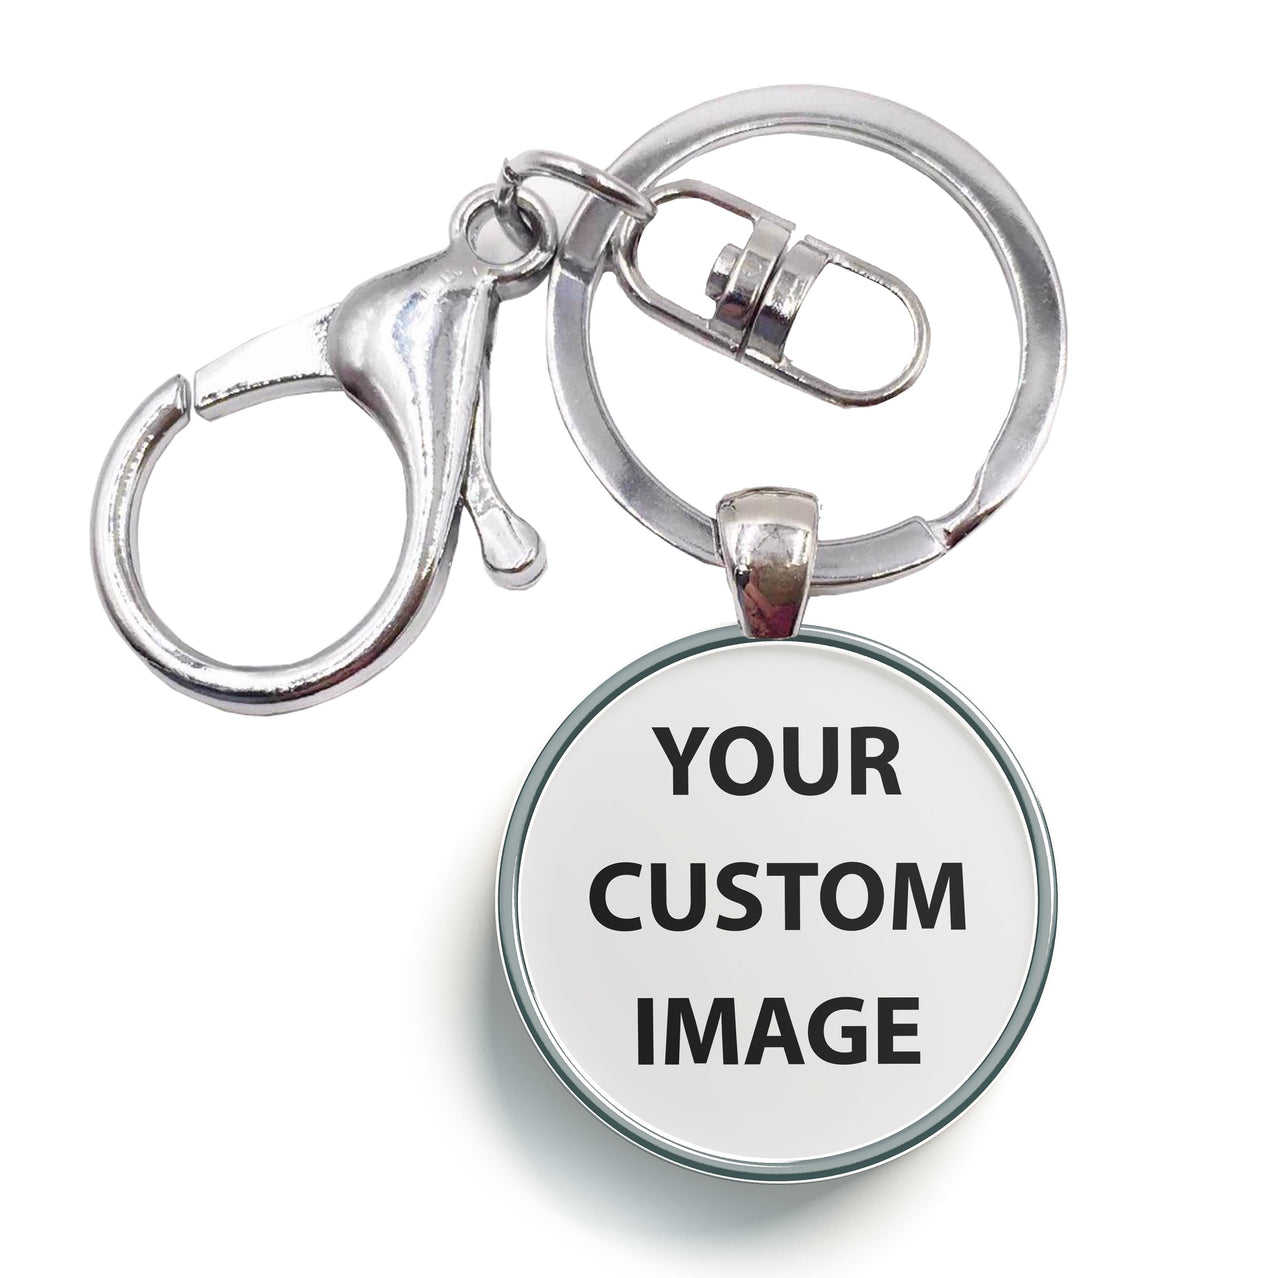 Your Custom Image Designed Circle Key Chains